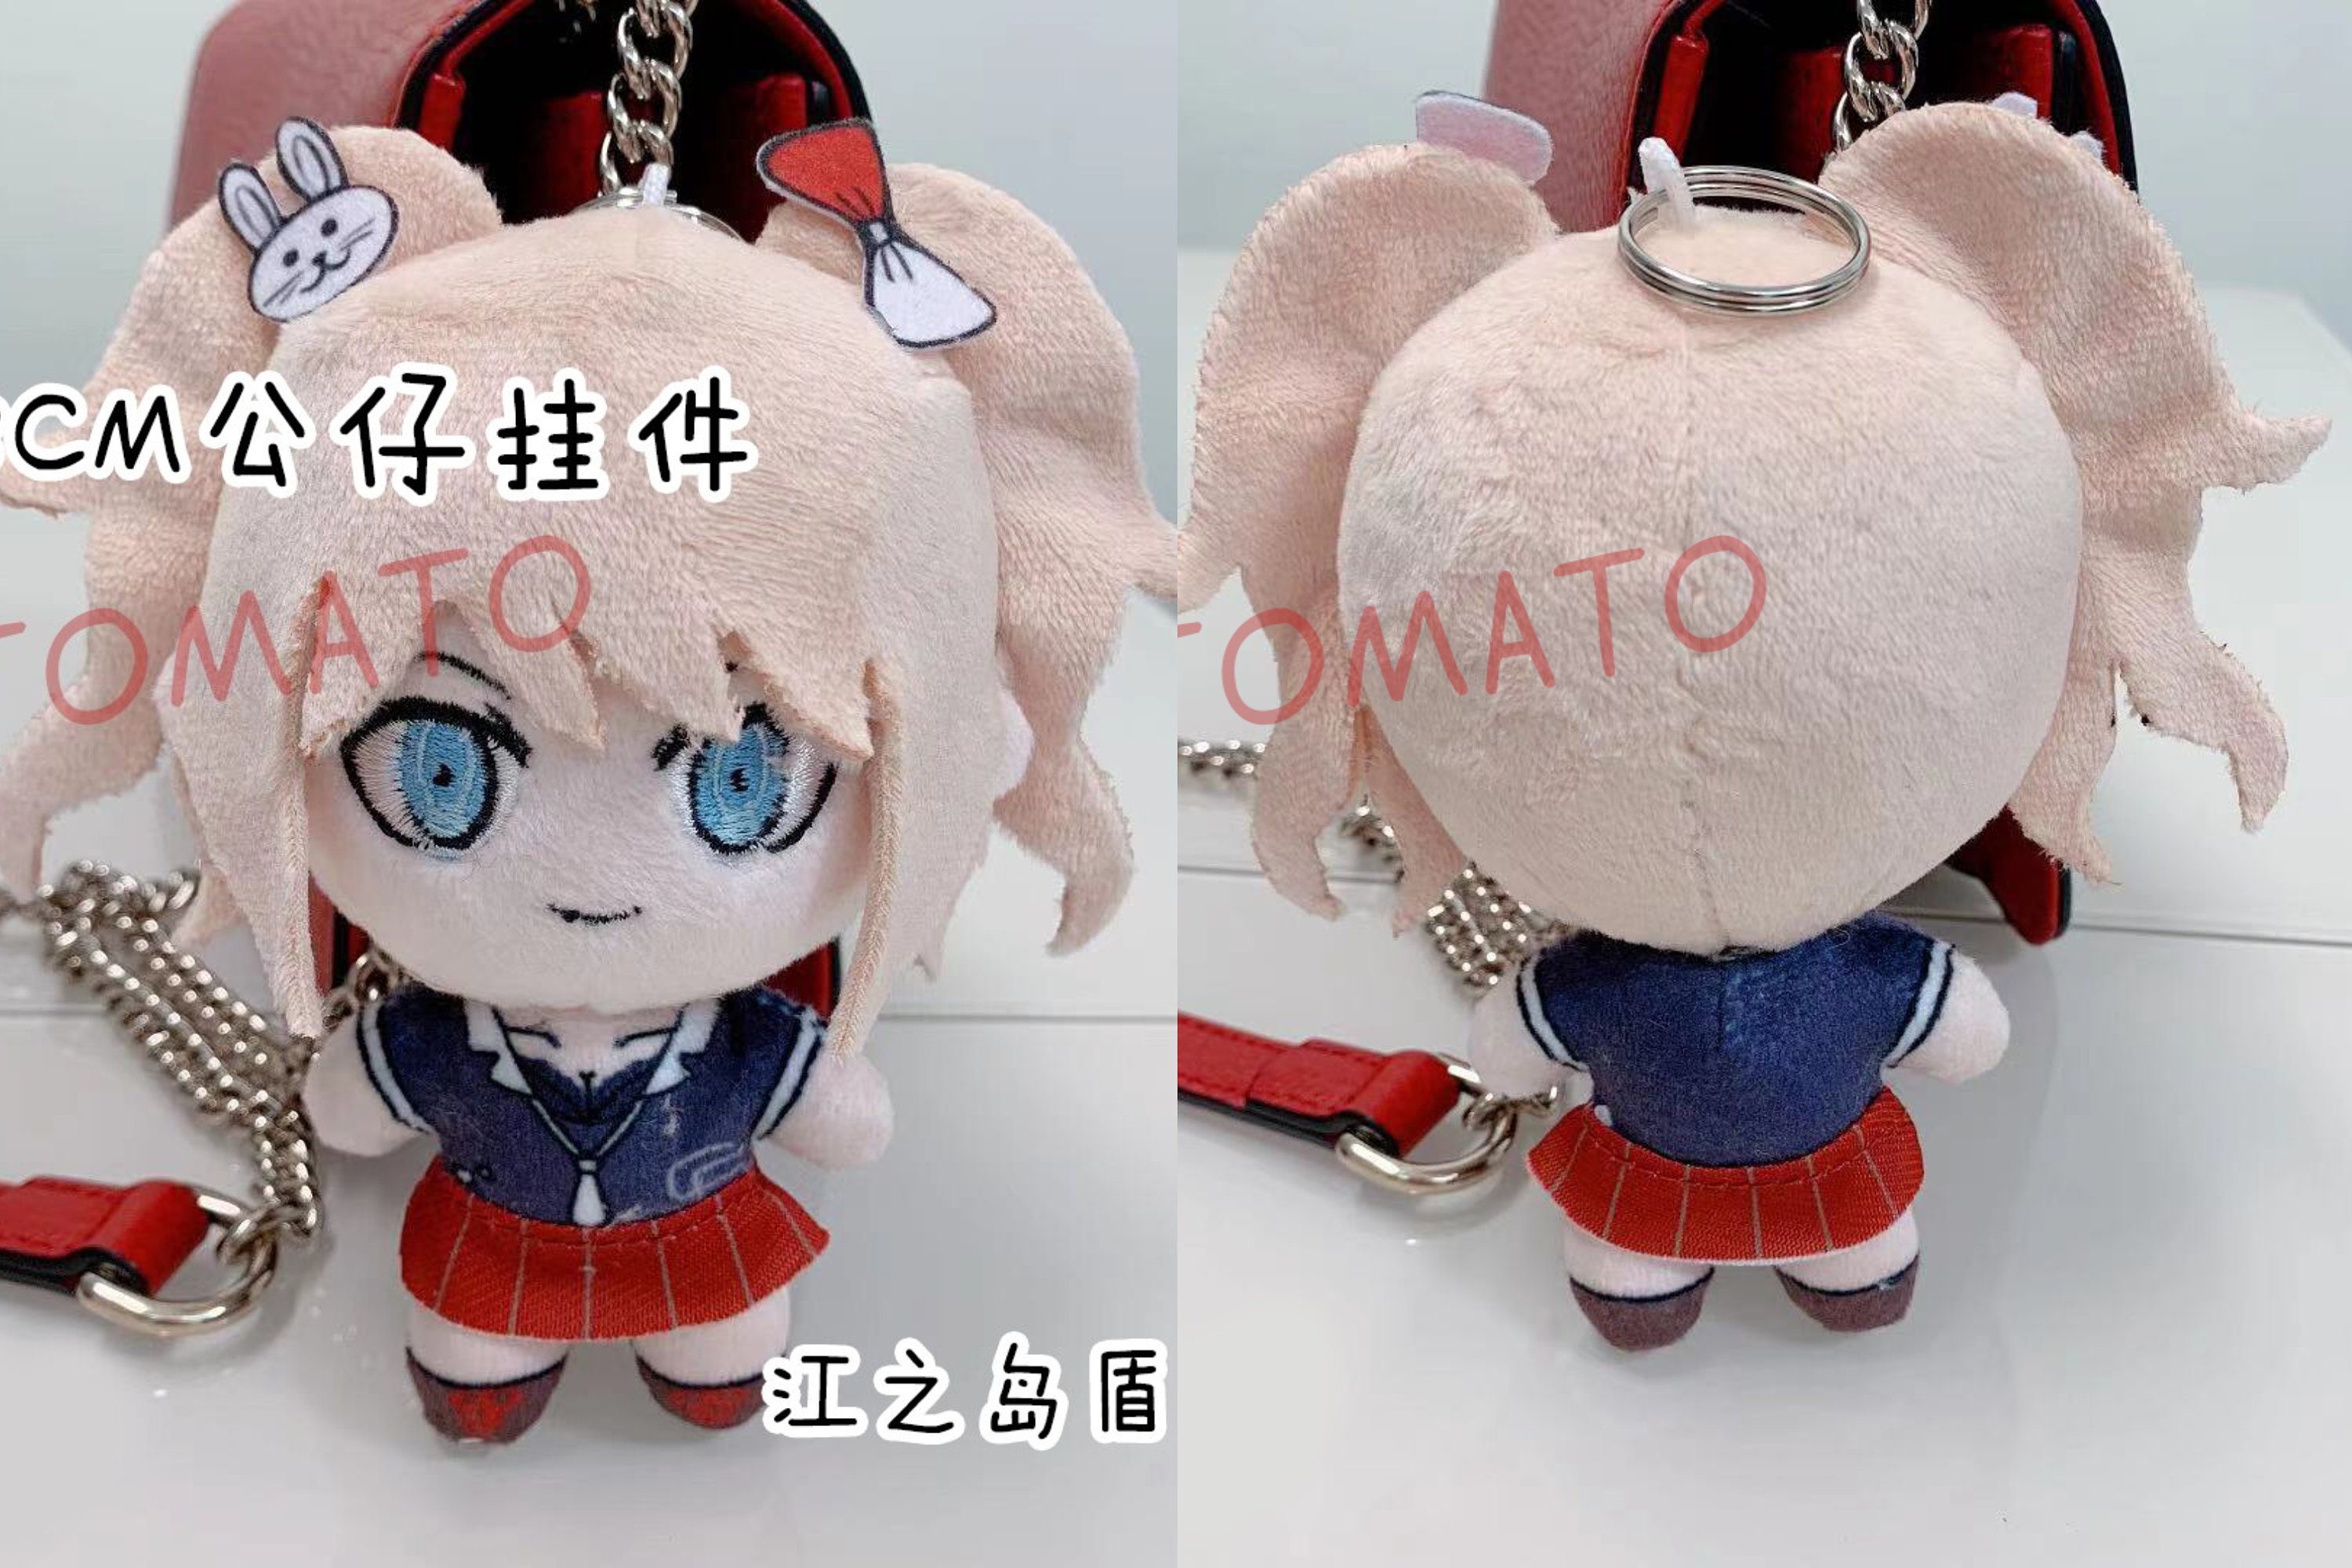 Dangan Ronpa Danganronpa Nagito Komaeda Plush Mini Doll Toy Keychain 13cm